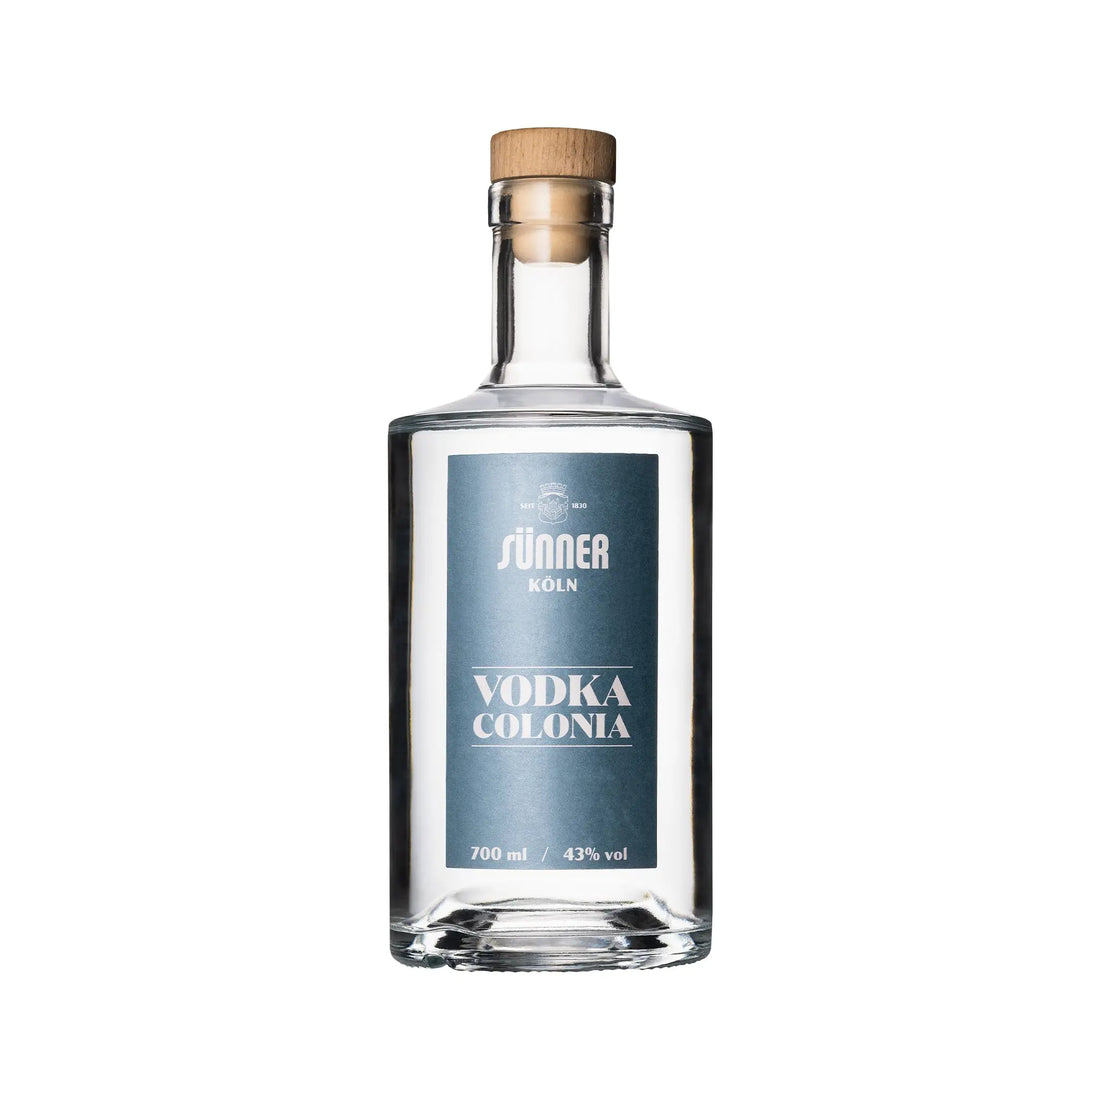 Sünner Vodka Colonia Sünner Spirits